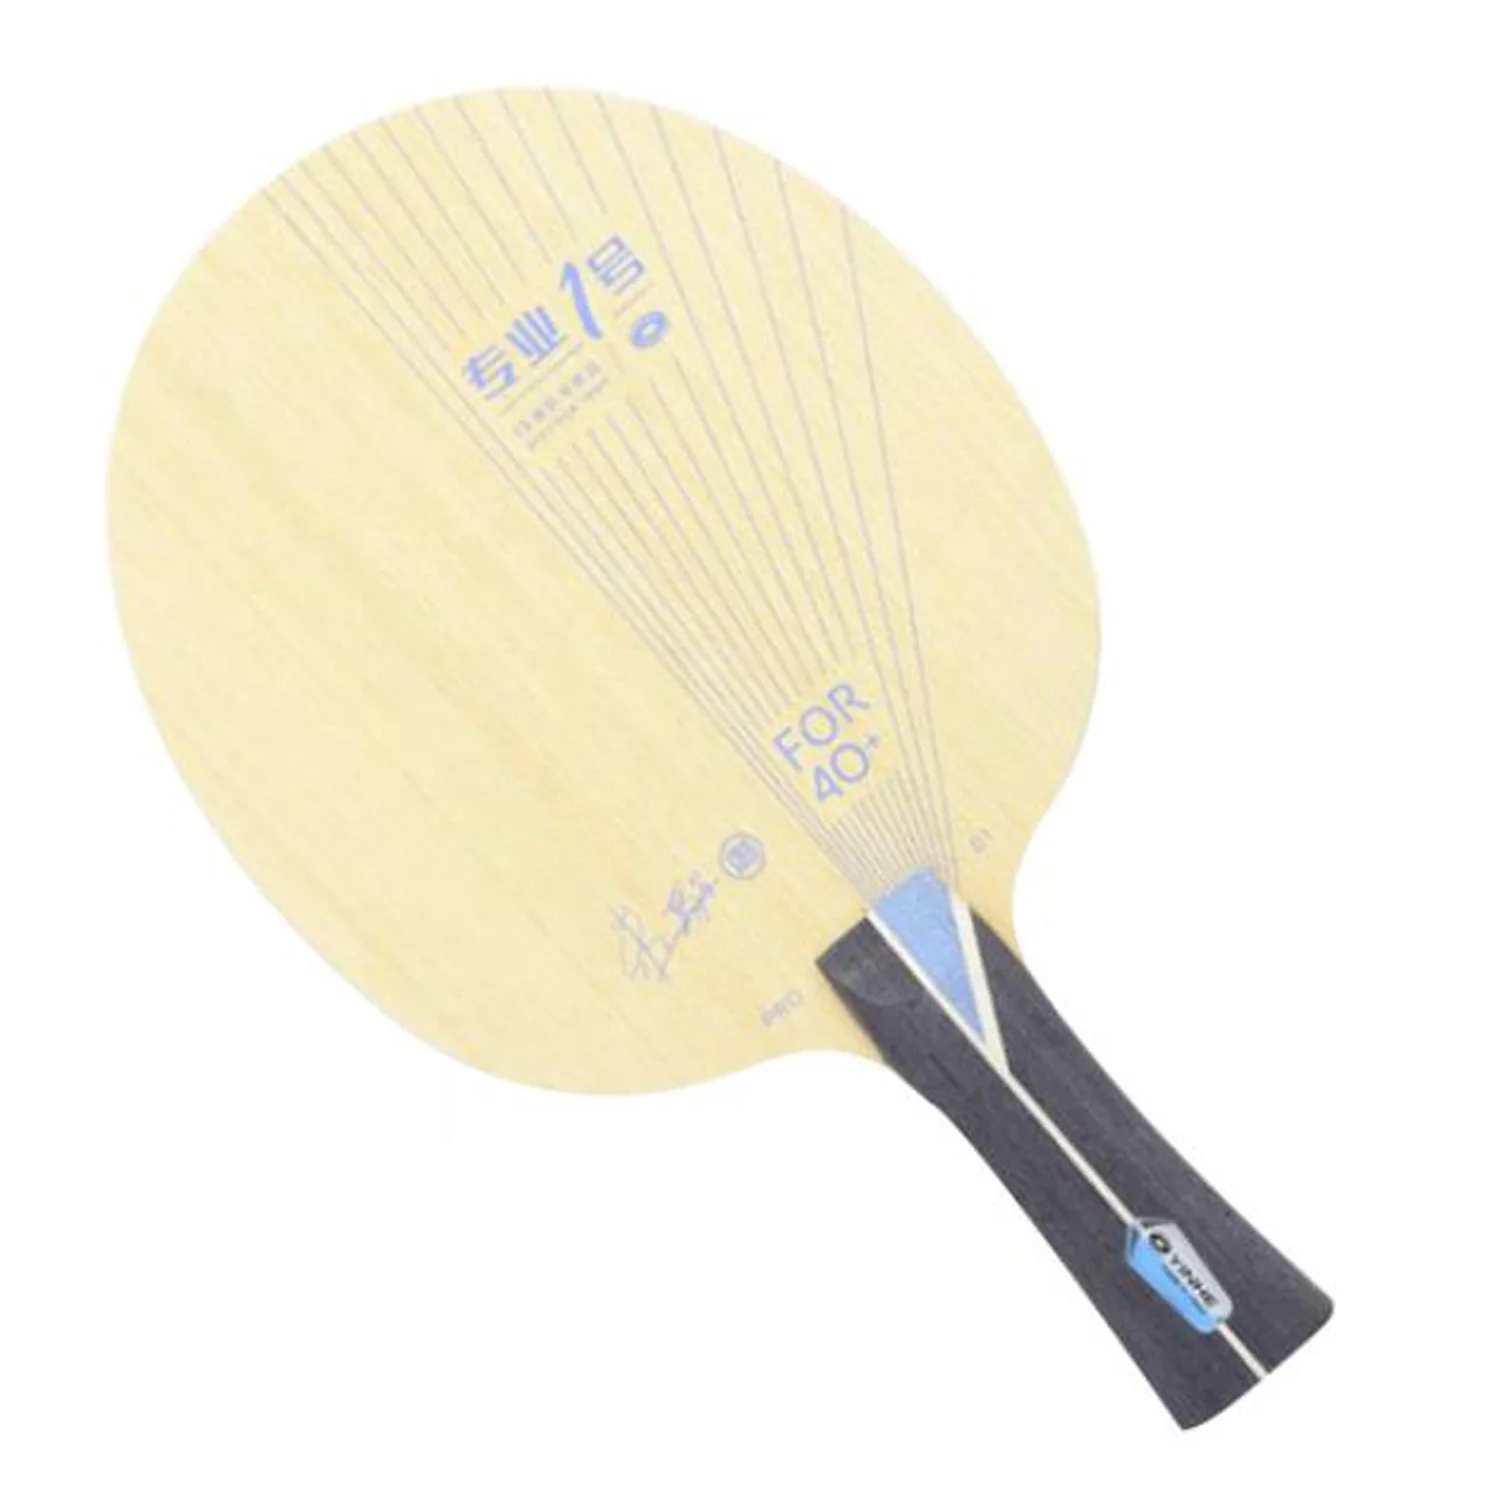 YINHE PRO-01 ALC ZHU YI Professional Table Tennis Blade Original YINHE PRO 01 Galaxy Racket Ping Pong Bat Paddle